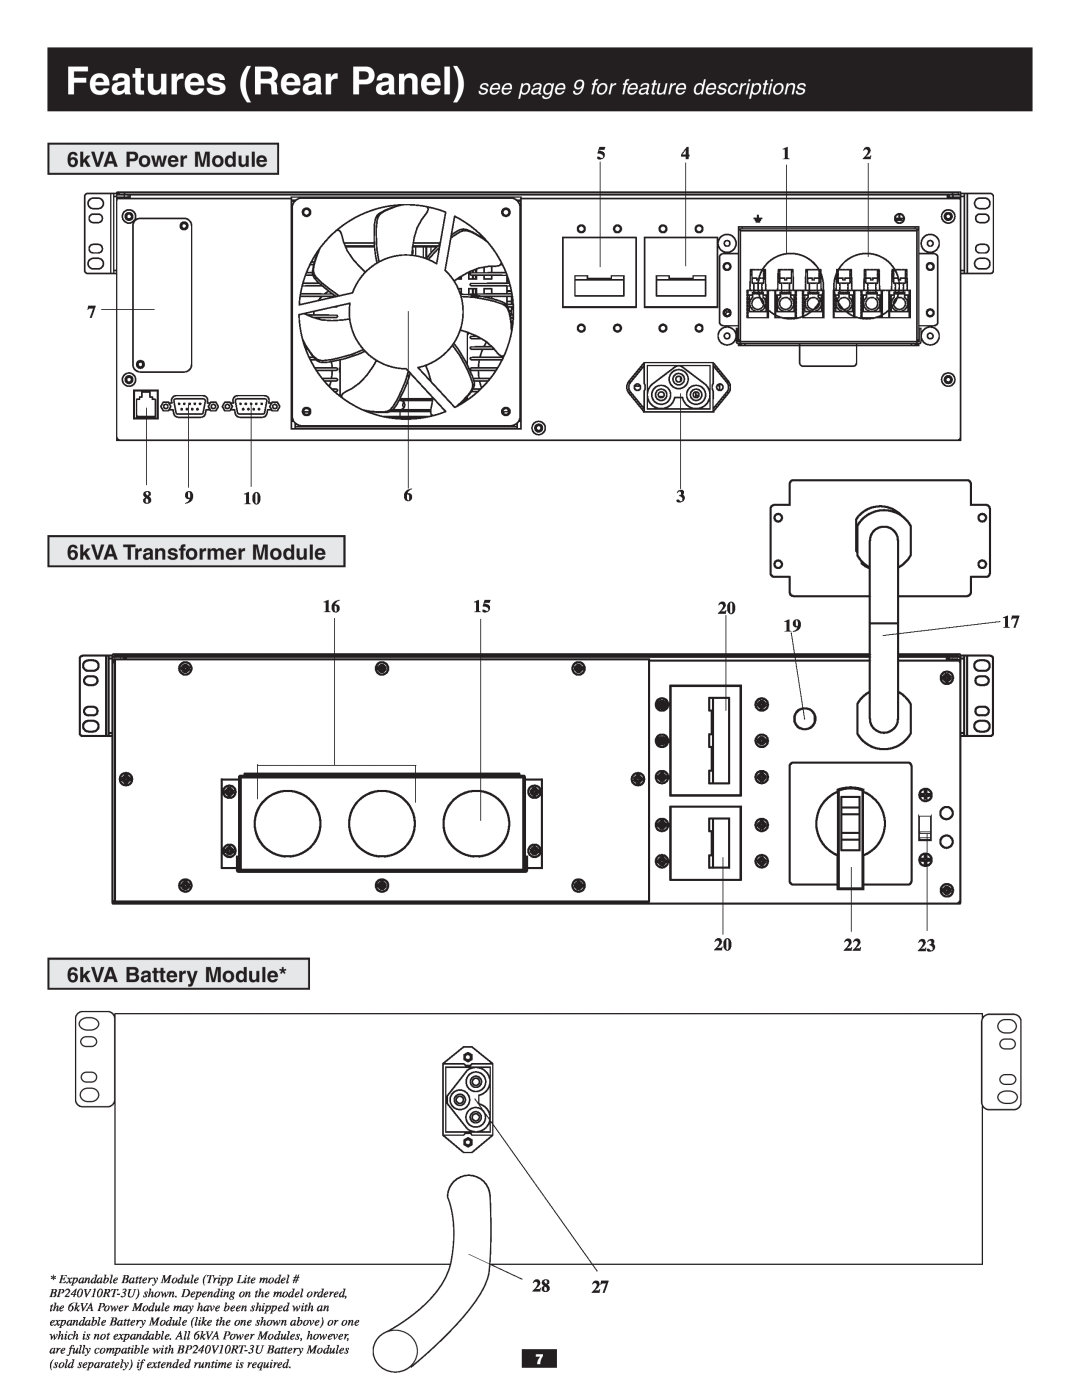 Tripp Lite 10KVA Features Rear Panel see page 9 for feature descriptions, 6kVA Power Module, 6kVA Transformer Module 